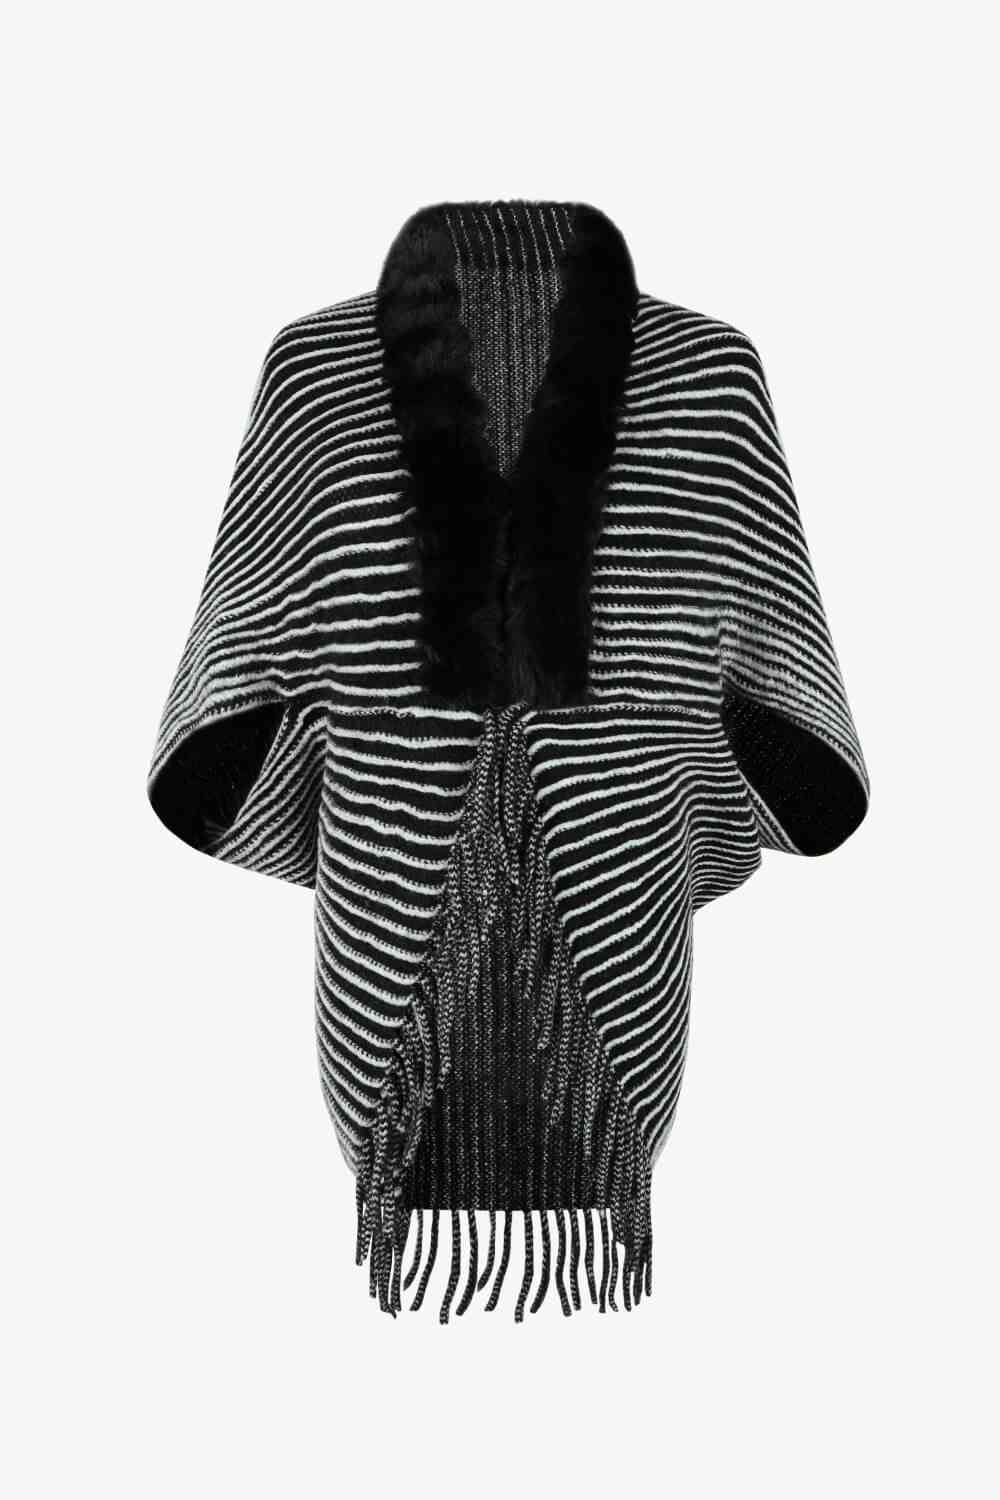 Striped Open Front Fringe Poncho Black One Size